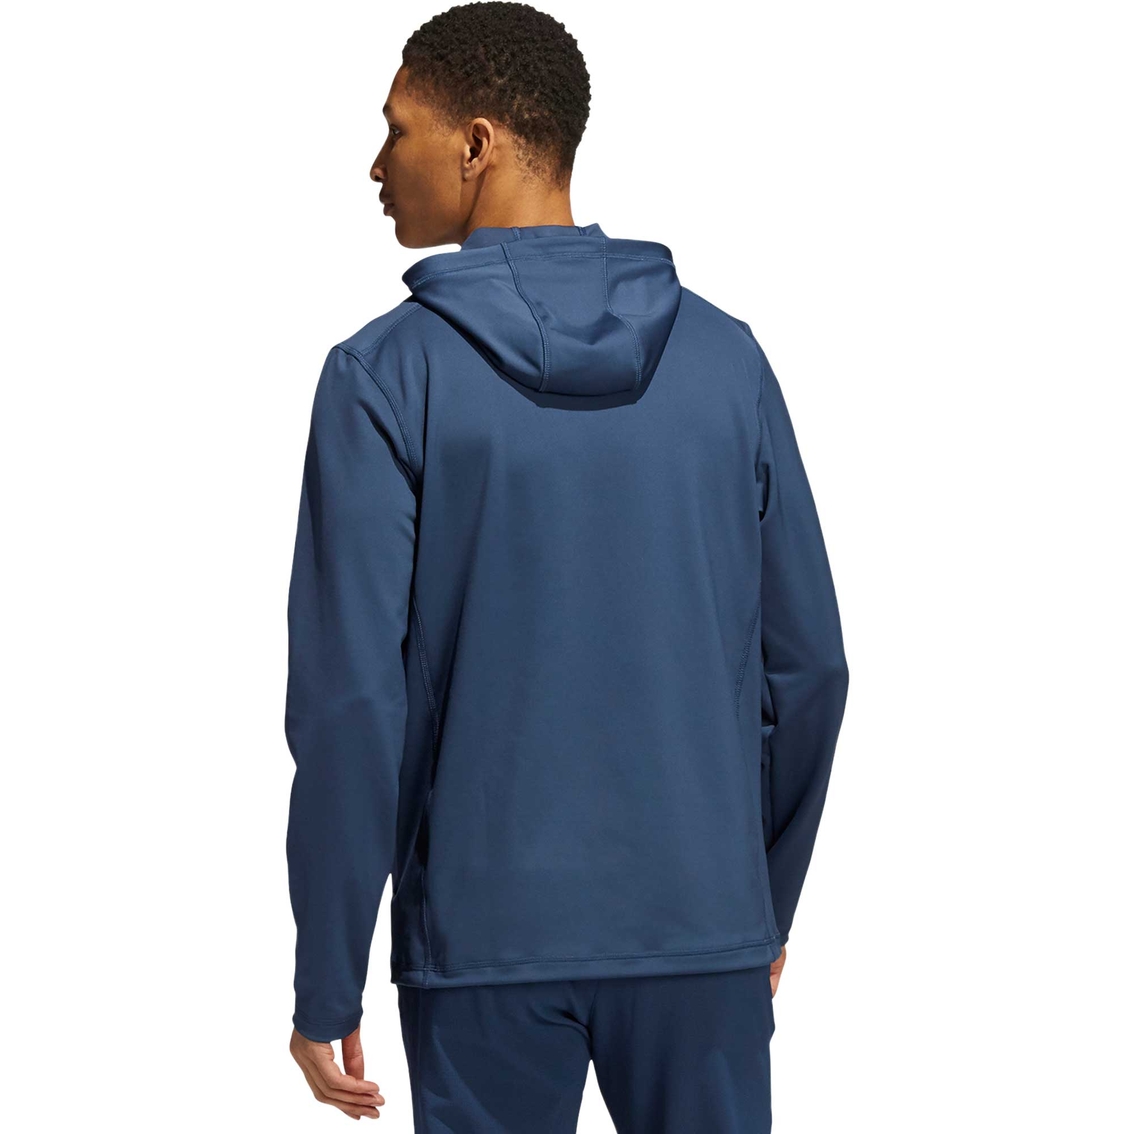 Adidas Primegreen Quarter Zip Hoodie Pullover | Shirts | Clothing ...